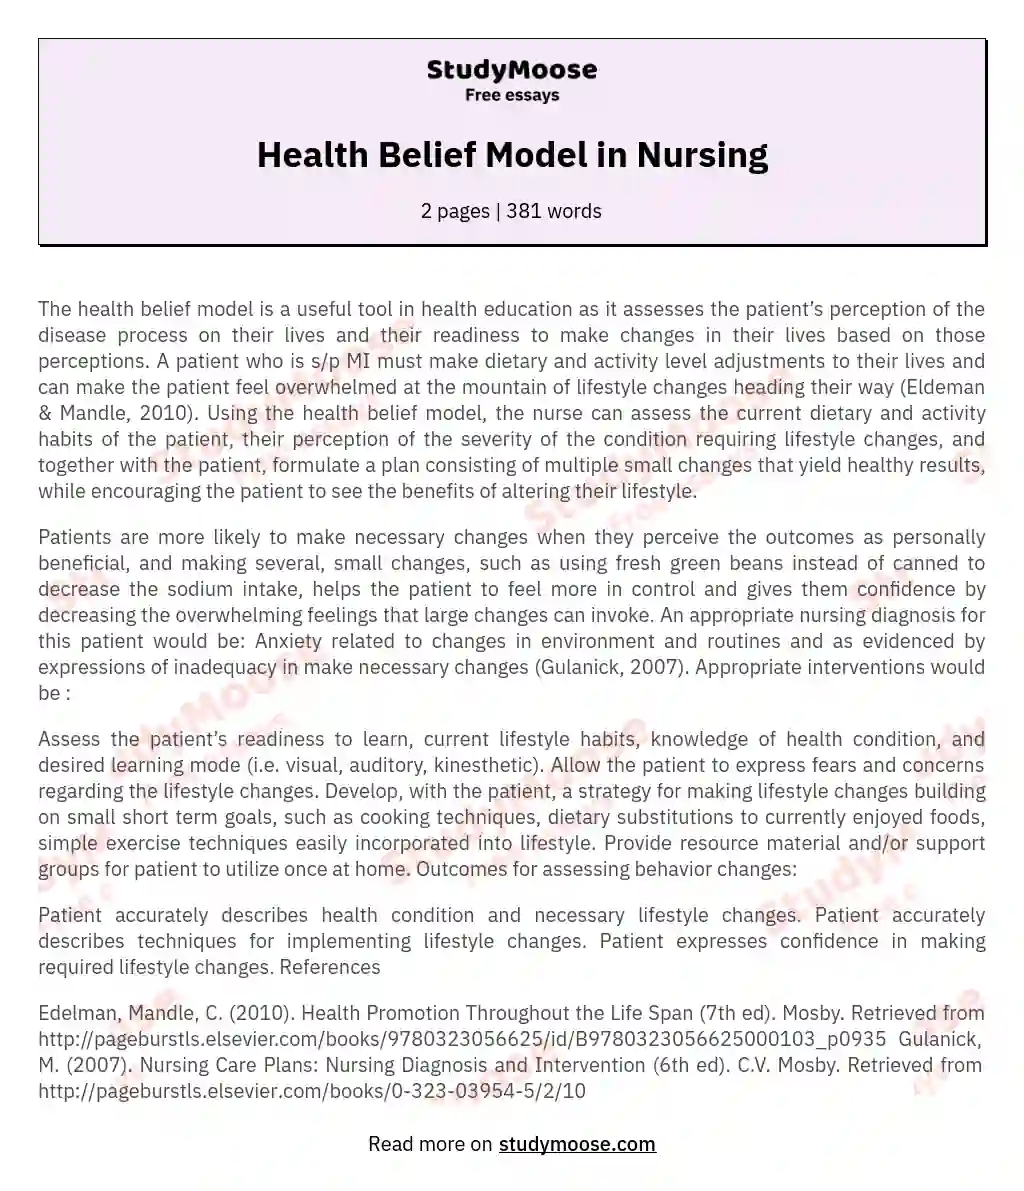 Health Belief Model in Nursing essay